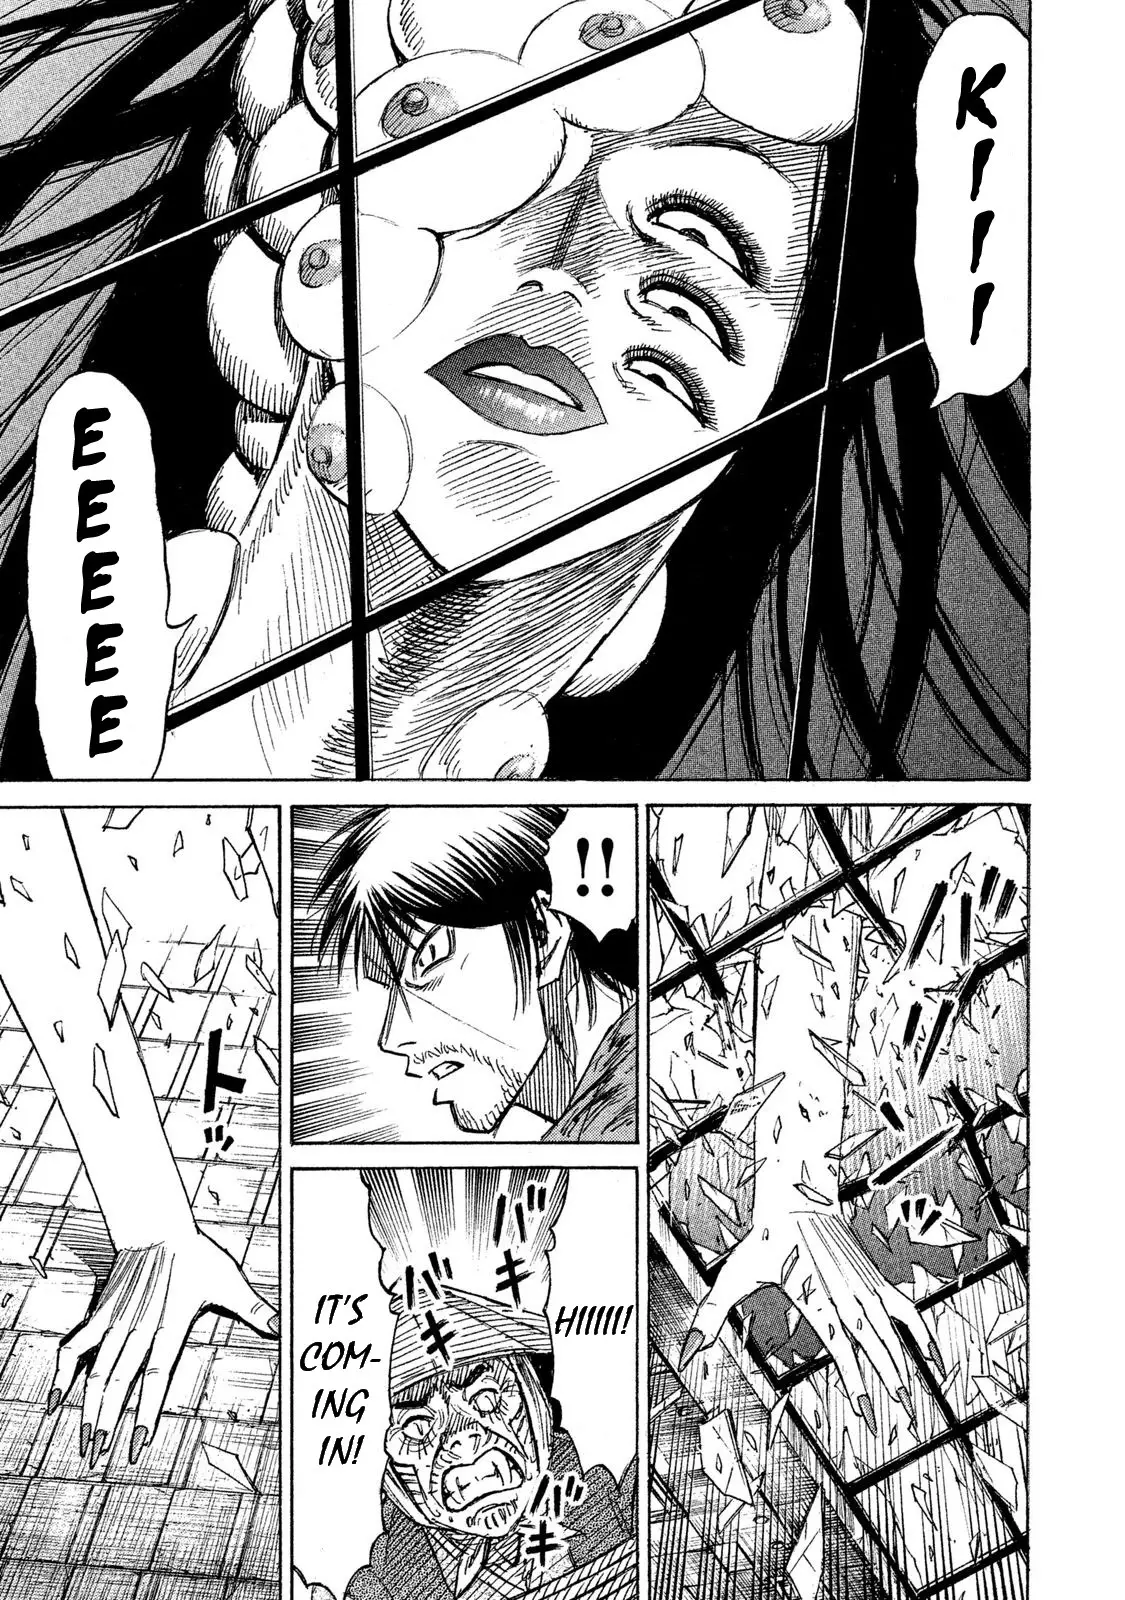 Higanjima - 48 Days Later - 16 page 7-054c0e84